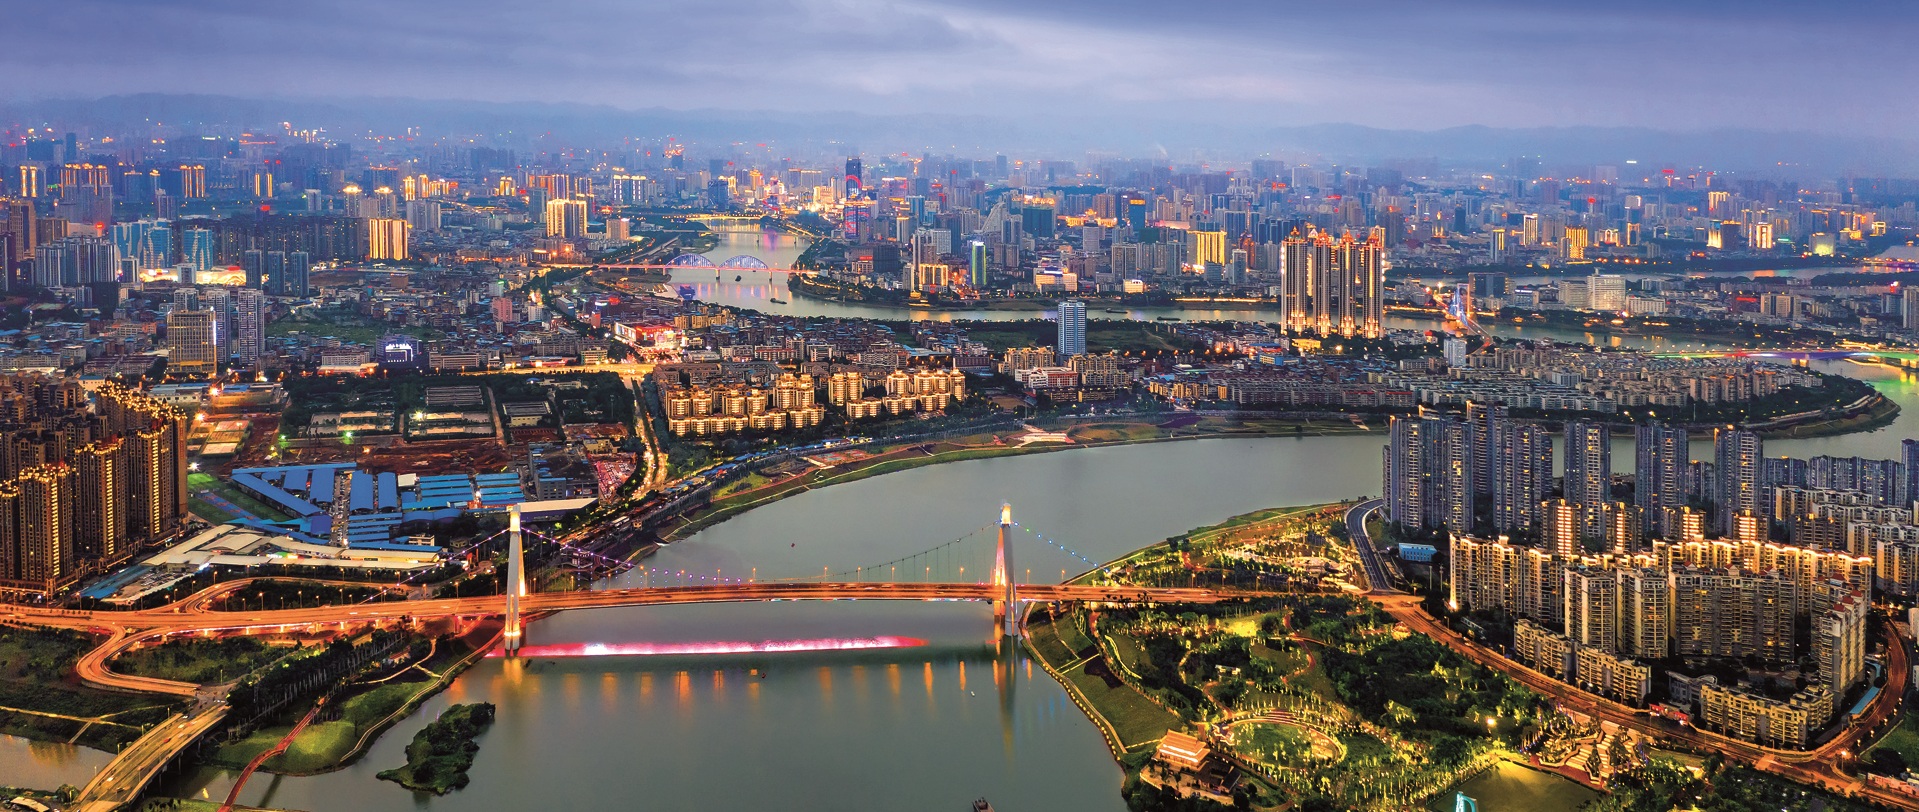 Guangxi set to become international trade hub